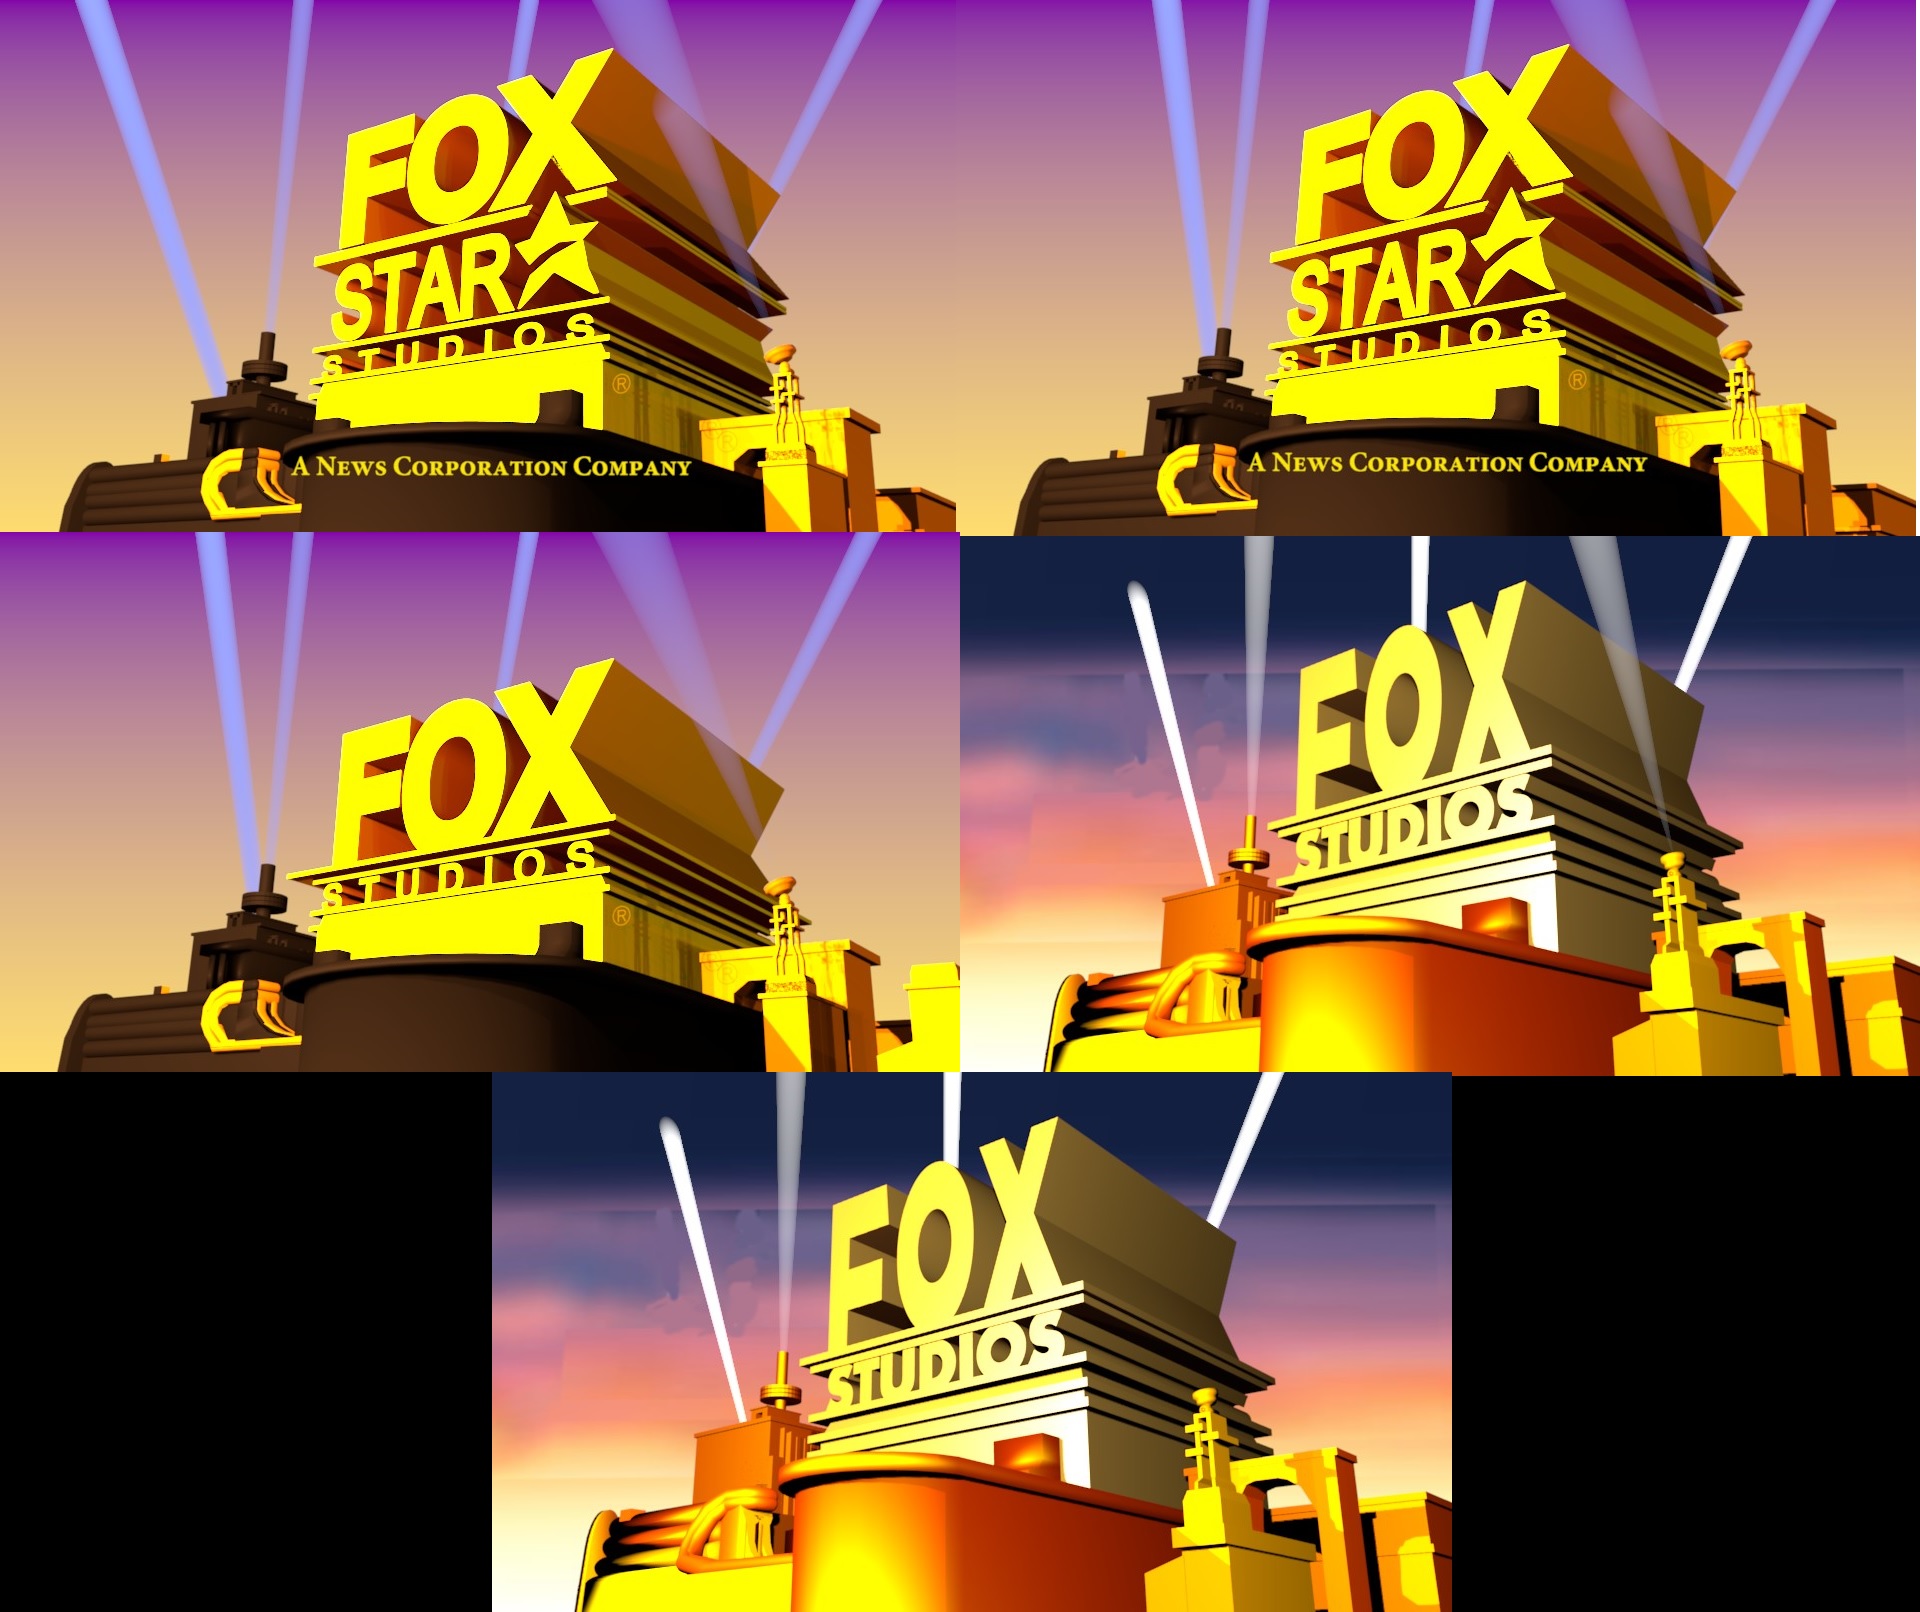 20th Century Fox logo 1994 Remake 2.0 by LogoManSeva on DeviantArt